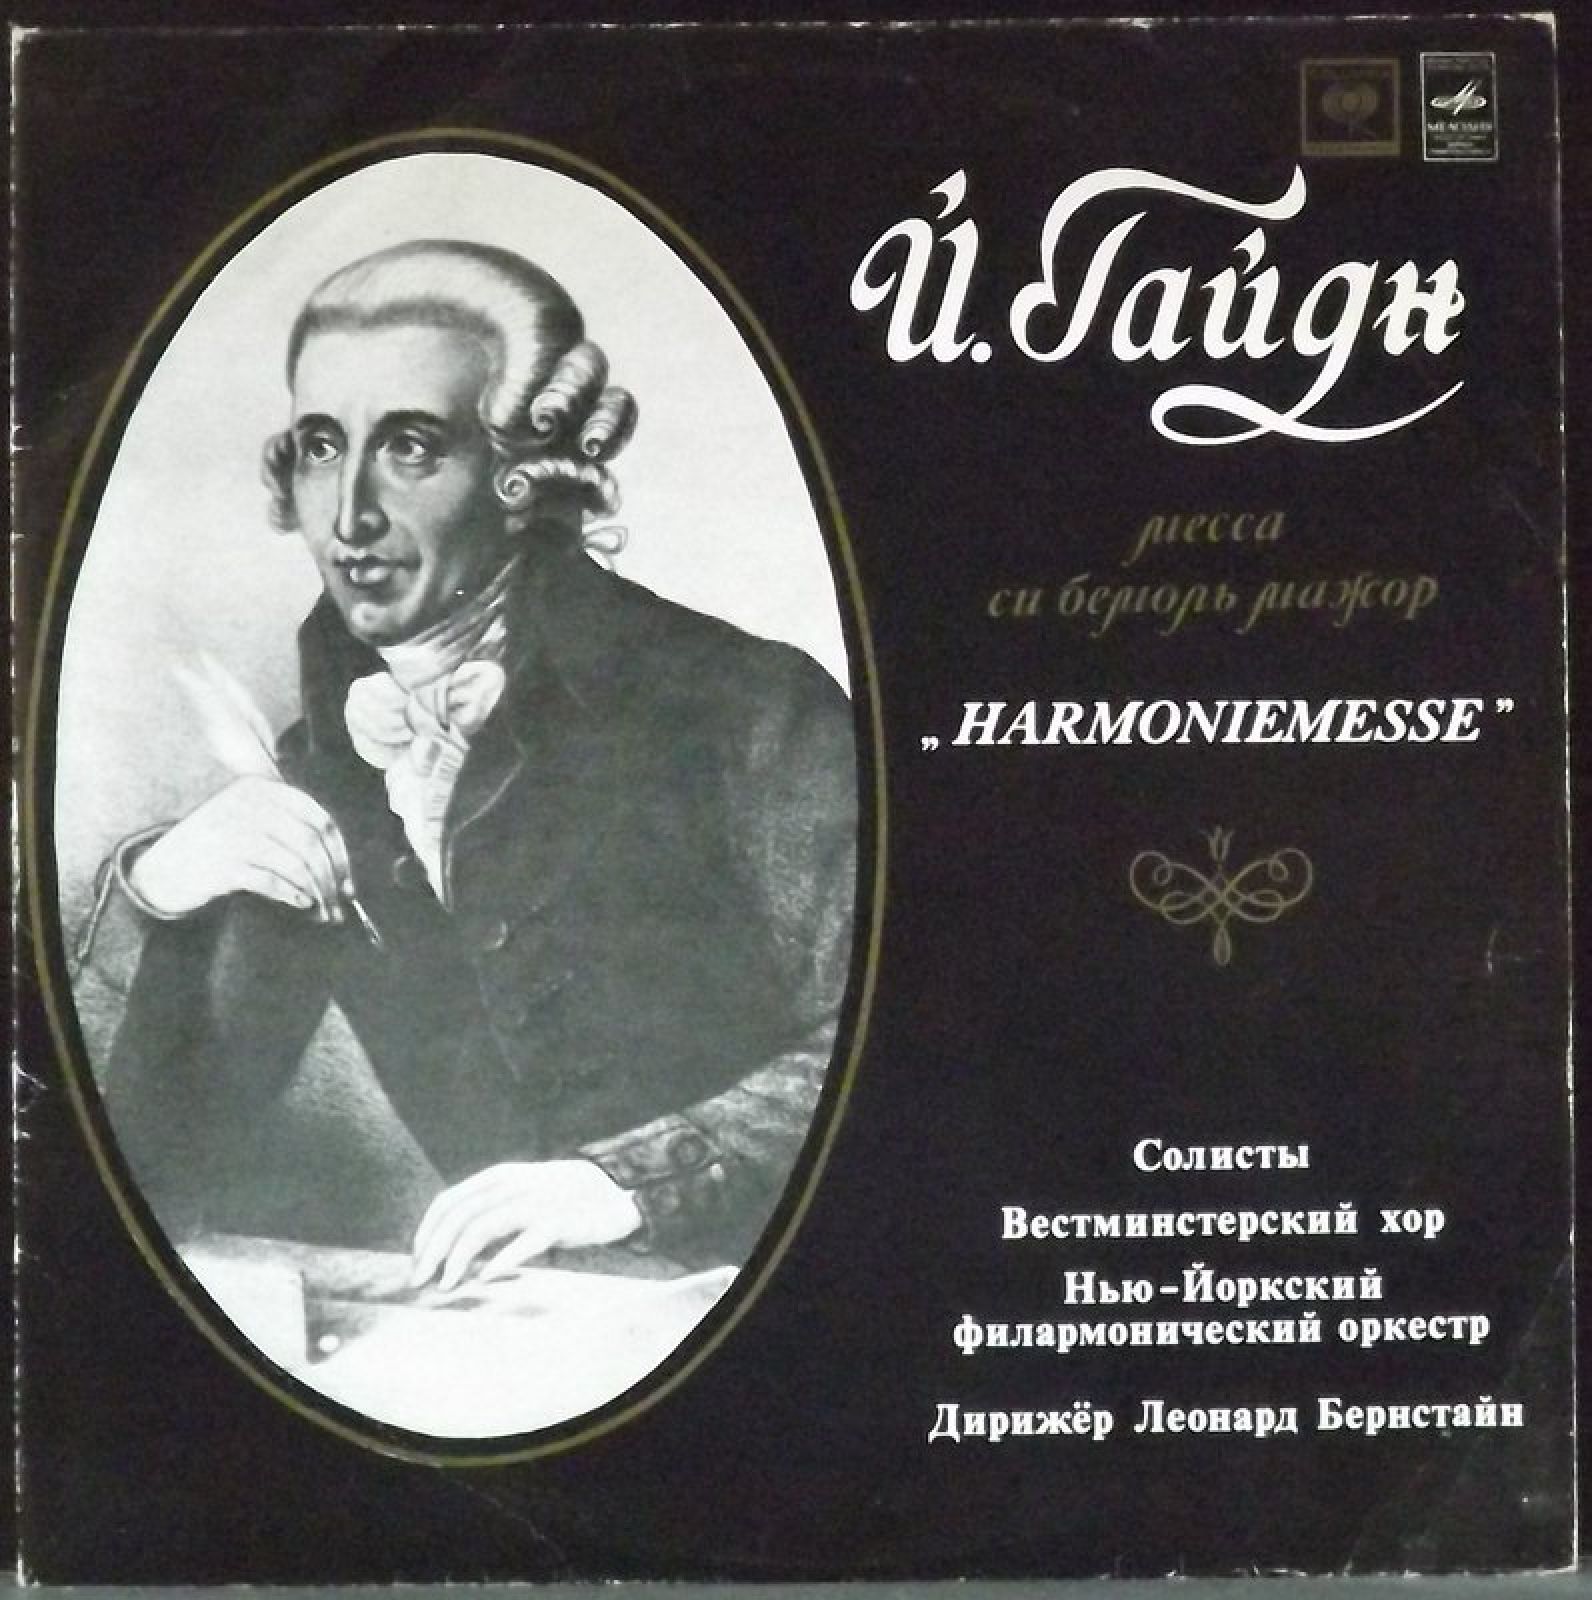 Гайдн мессы. Joseph Haydn Harmoniemesse. Гайдн пластинки. Гайдн маленькая Органная месса. Йозеф Гайдн информация.